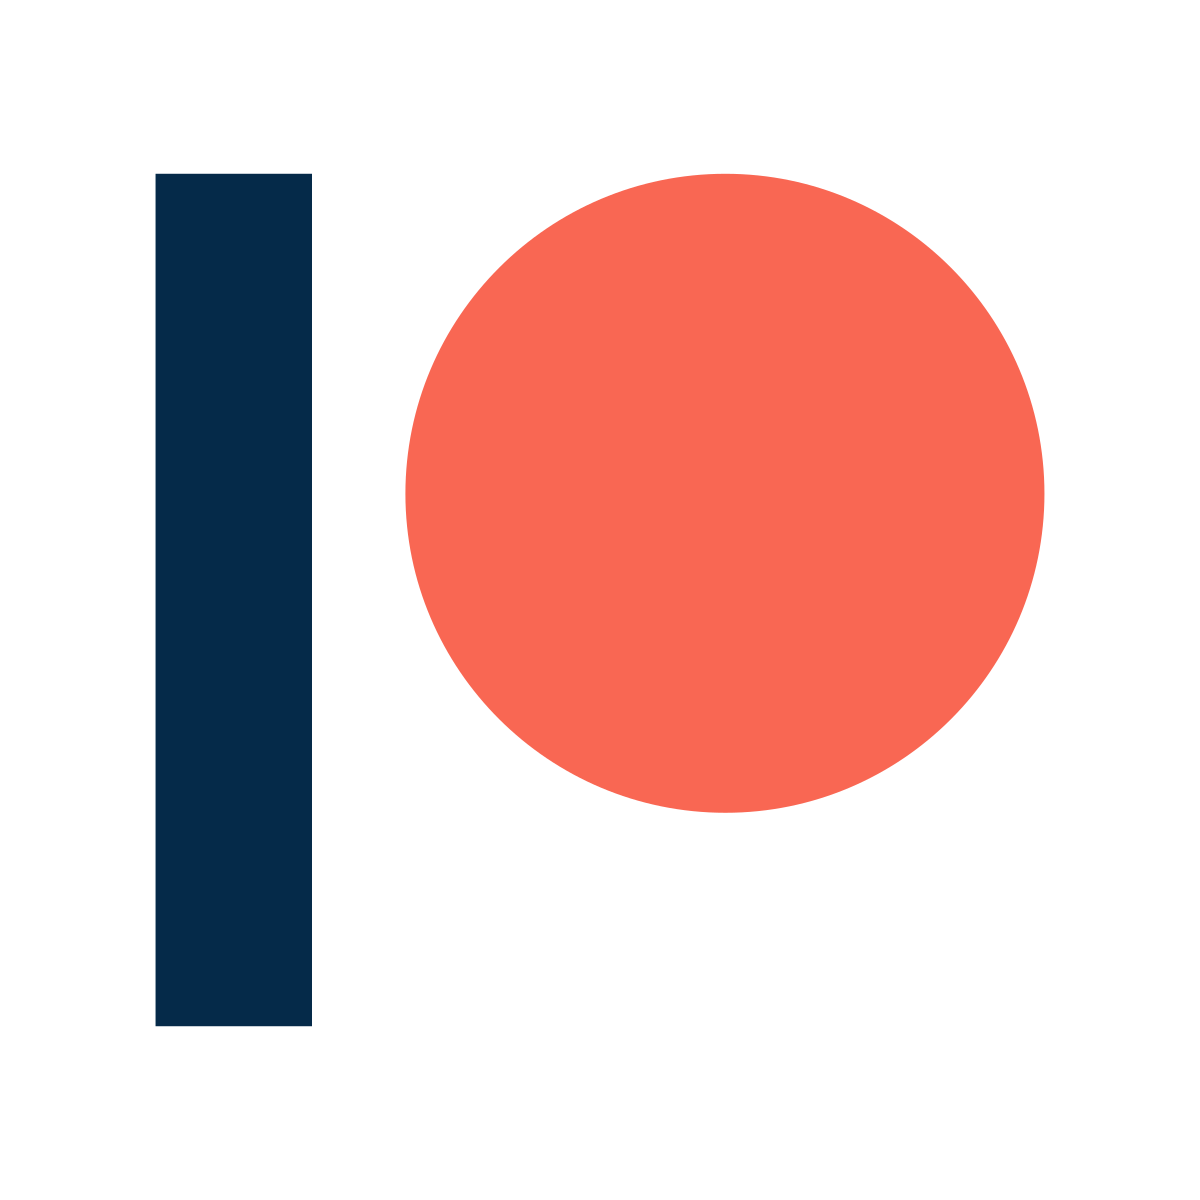 kisspng-patreon-logo-art-wikimedia-commons-film-22-5ace0f1a8cb986.8806118415234537225764